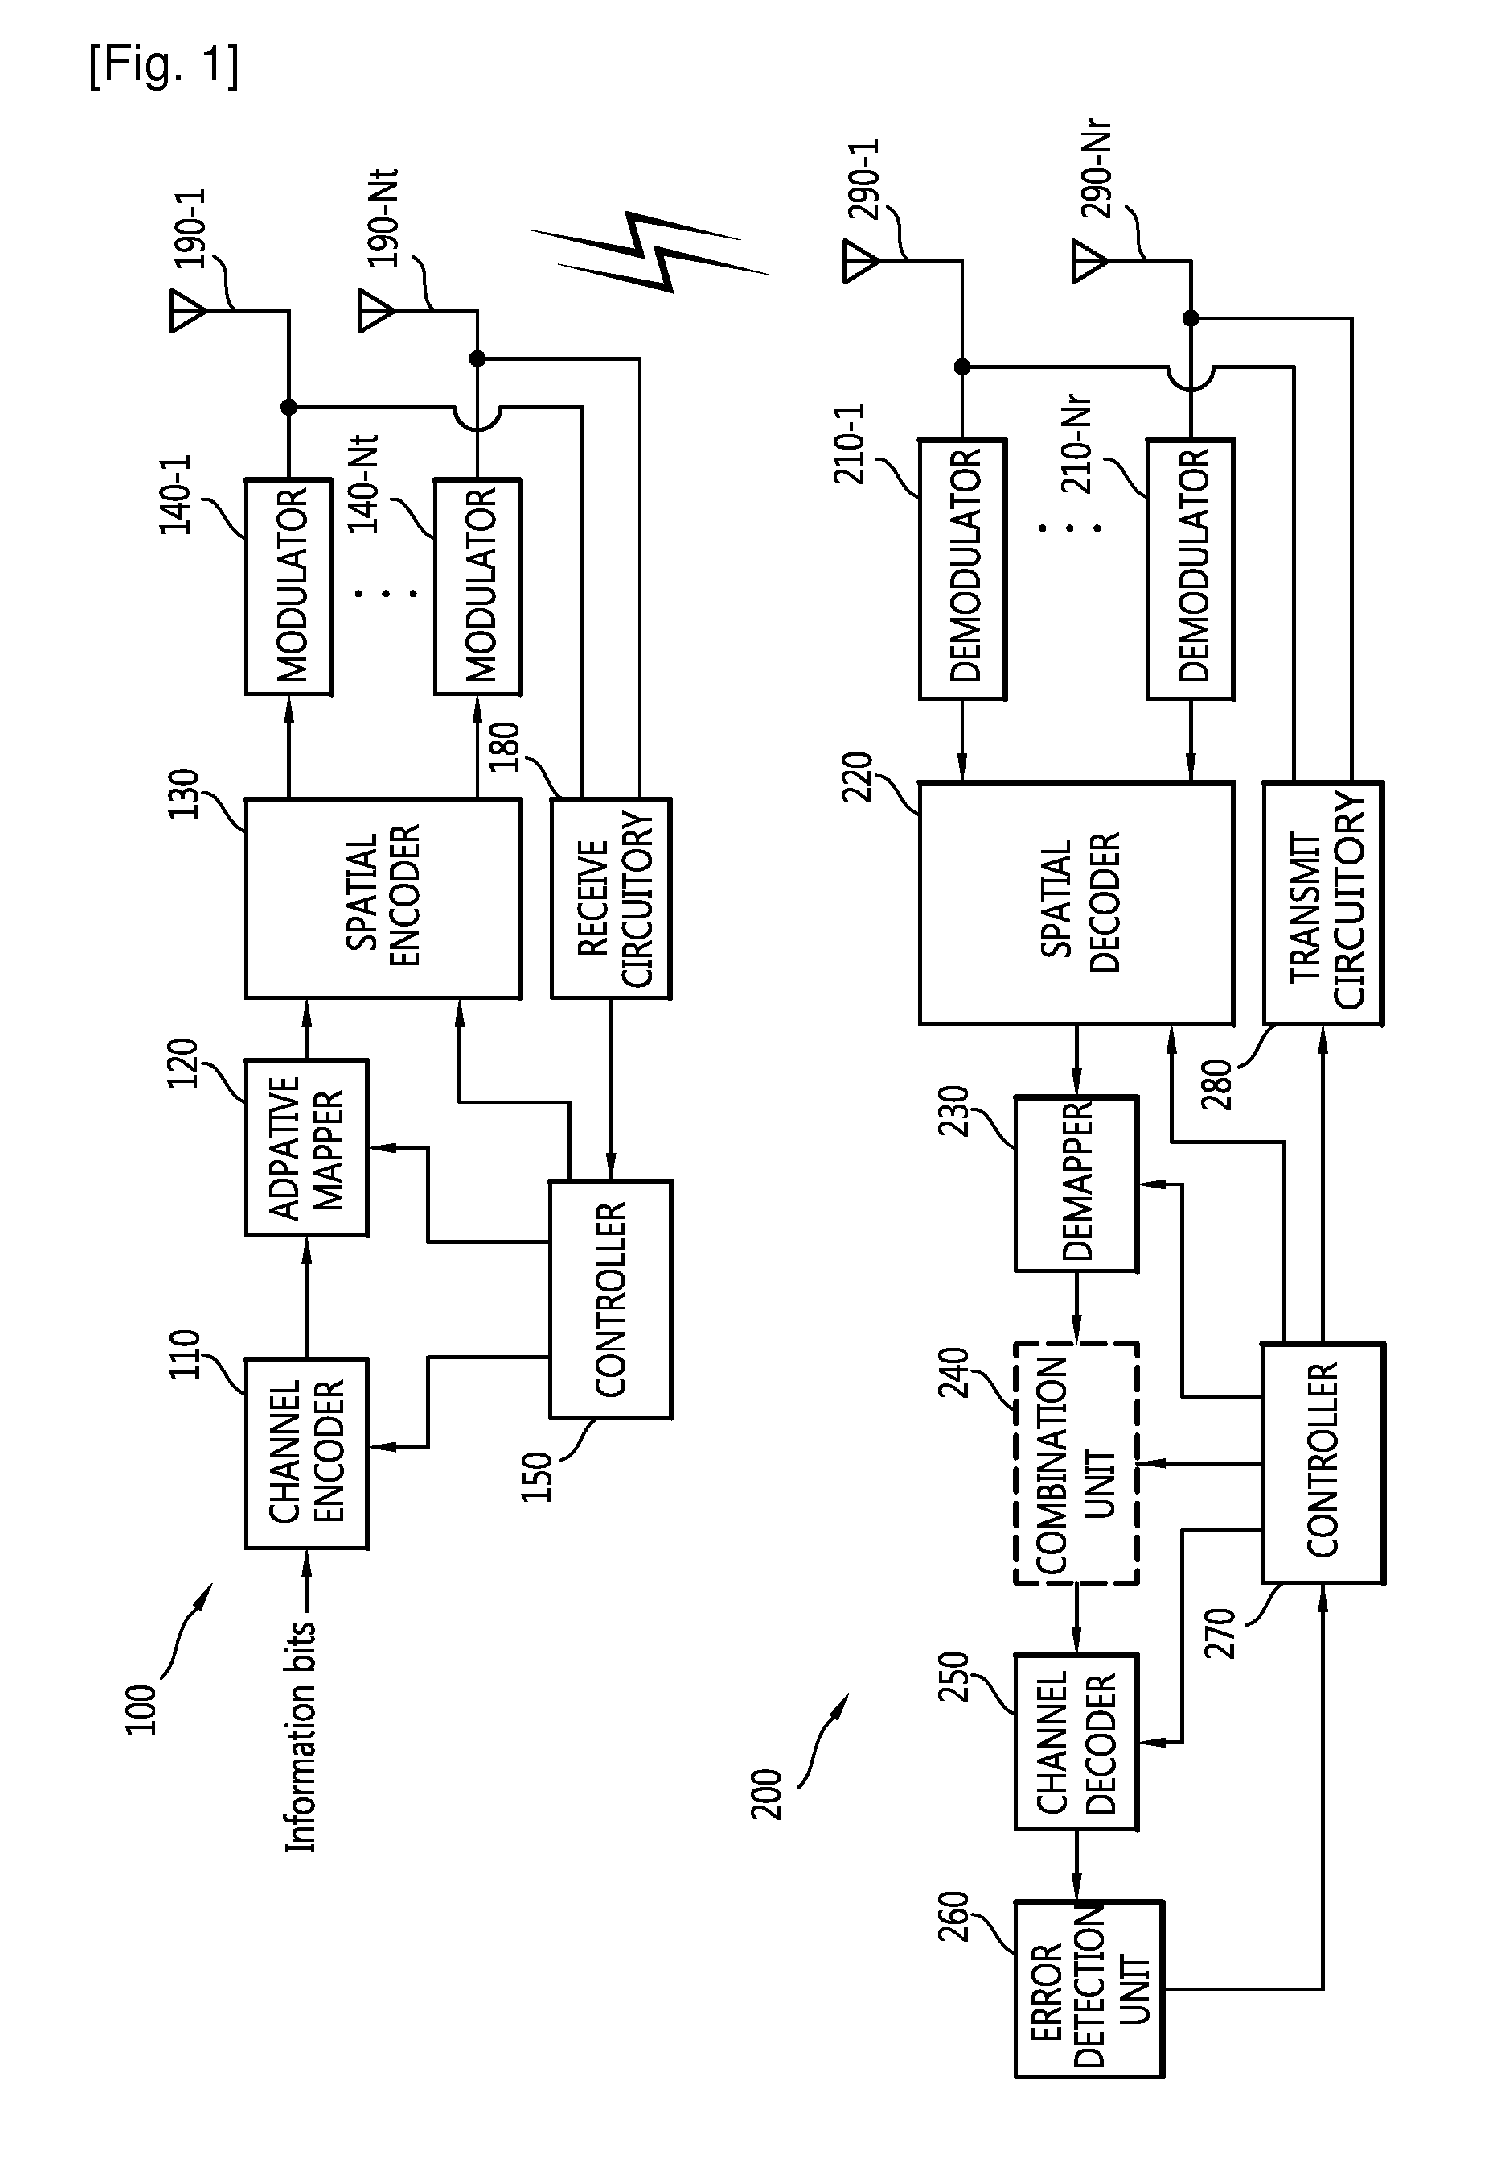 Method of transmitting data using constellation rearrangement